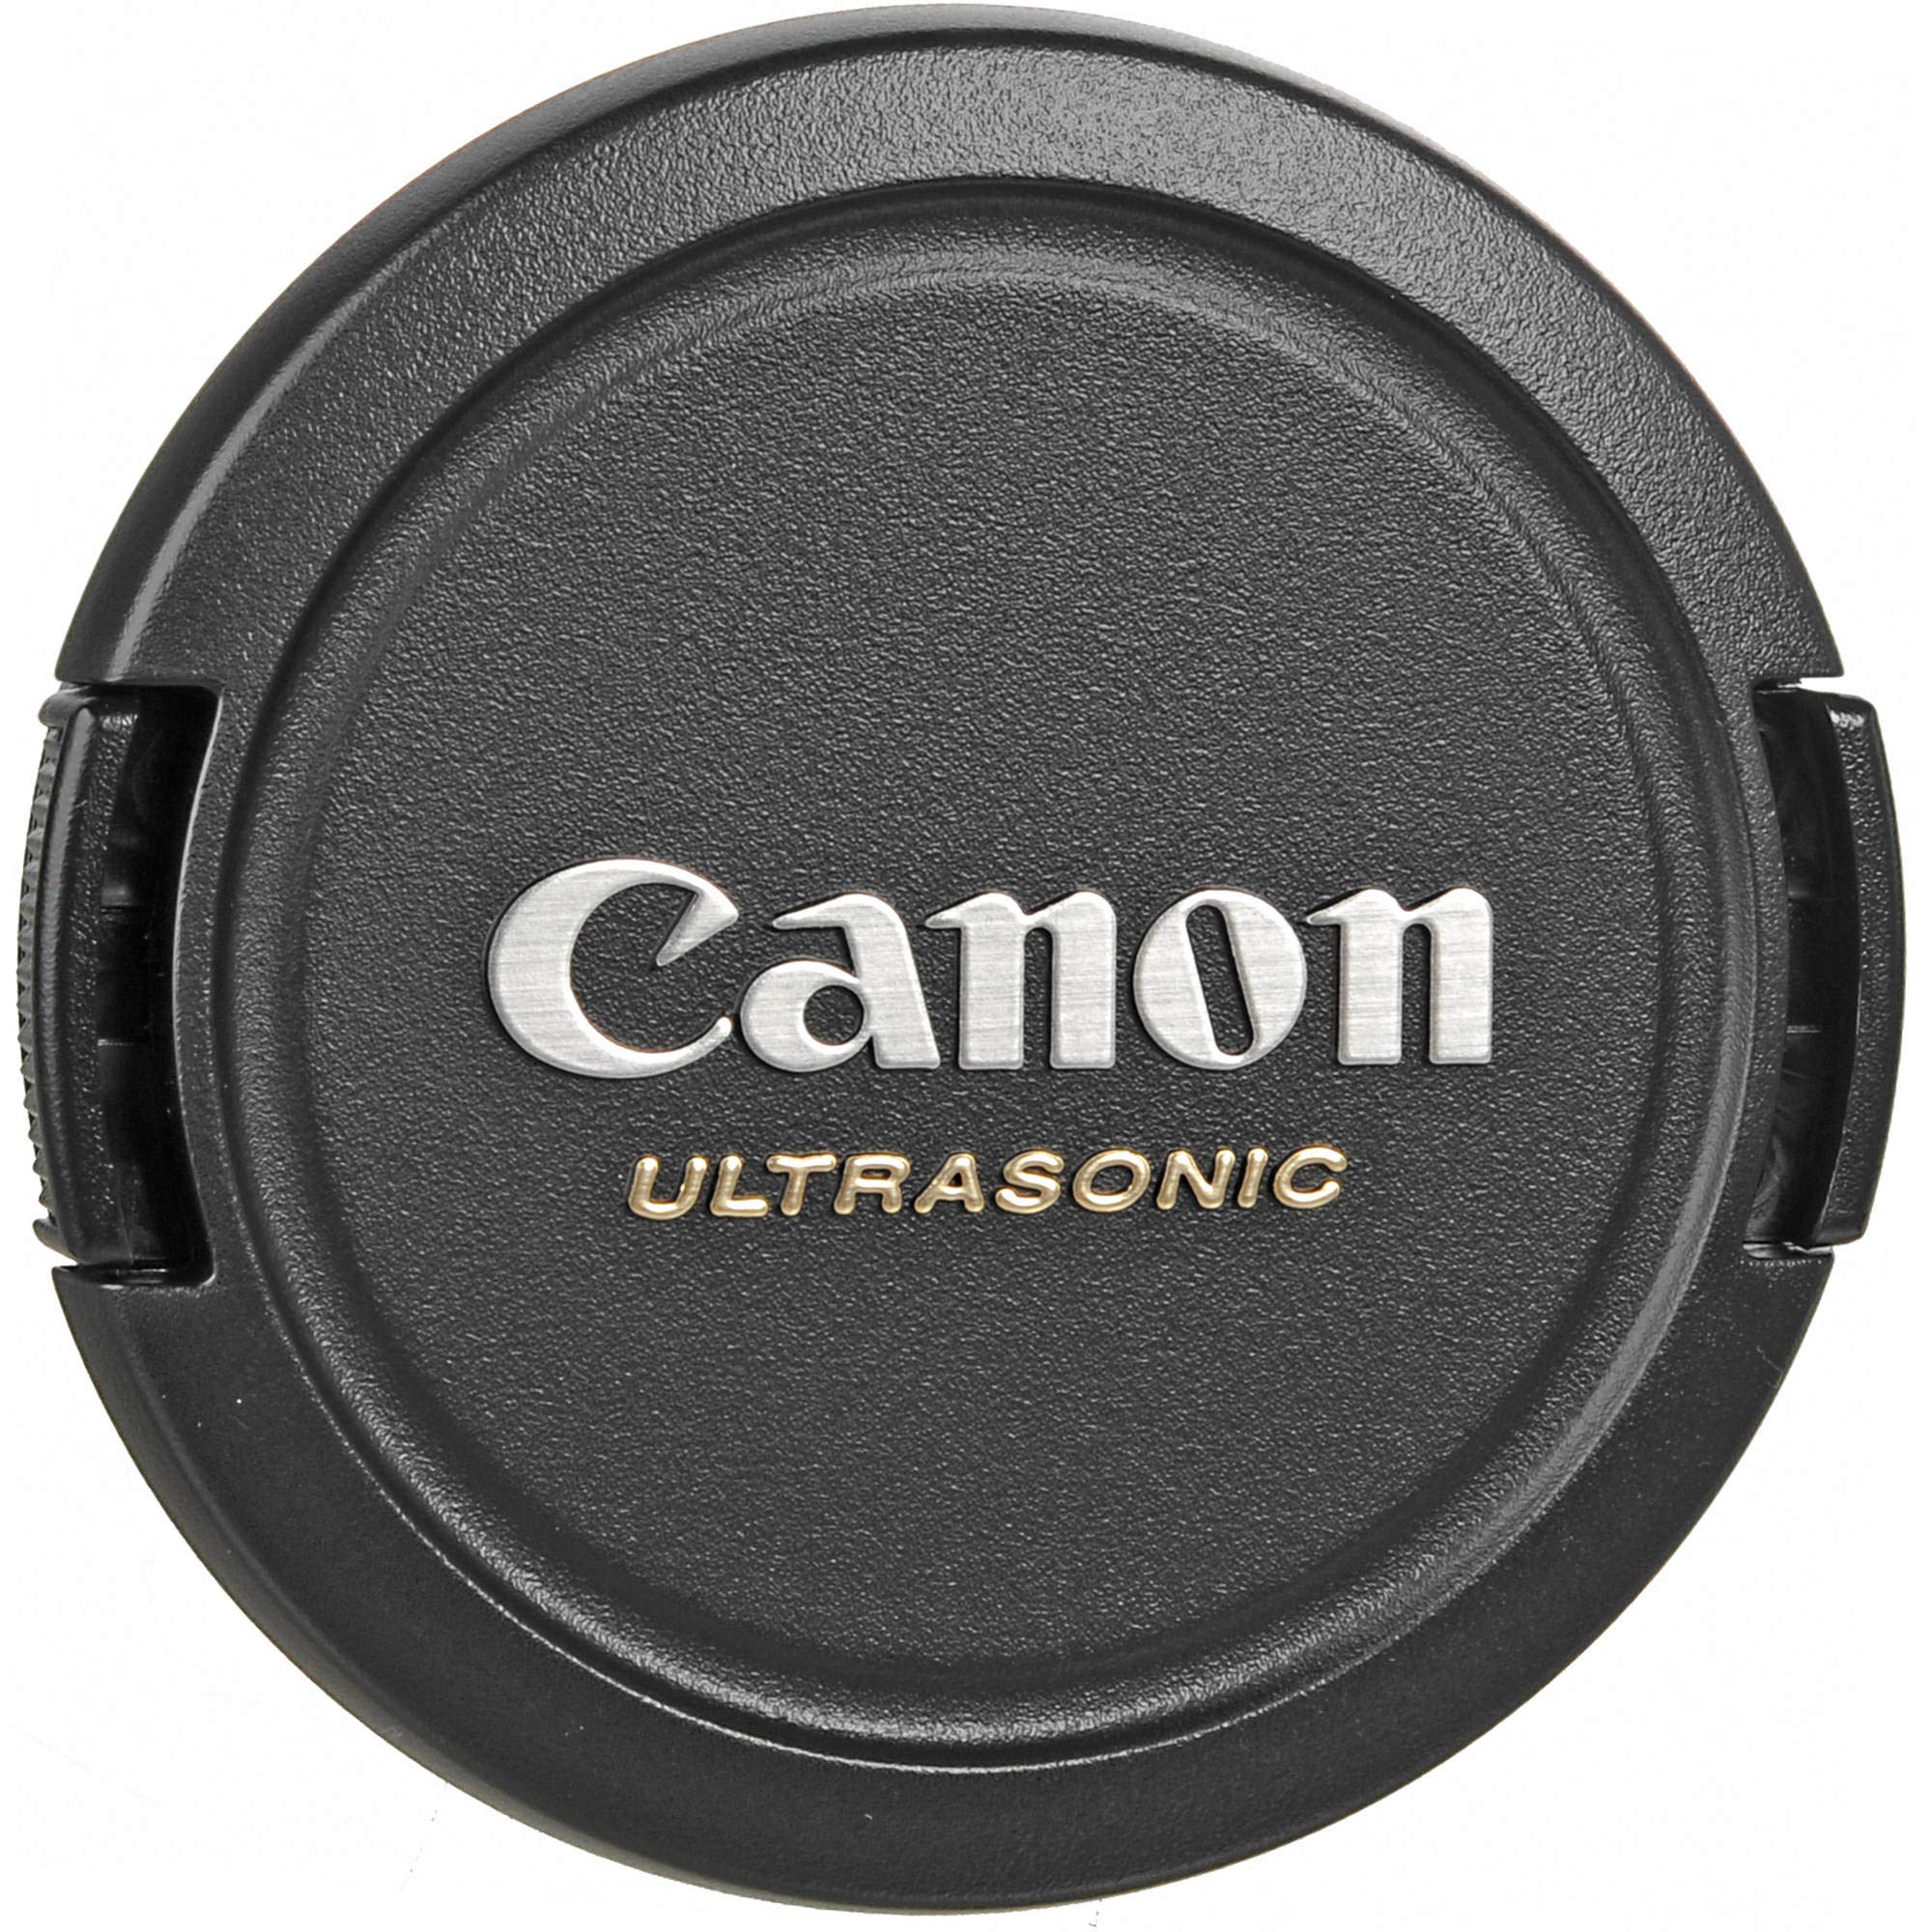 Canon EF 50mm f/1.4 USM Camera Lens + Cleaning Kit